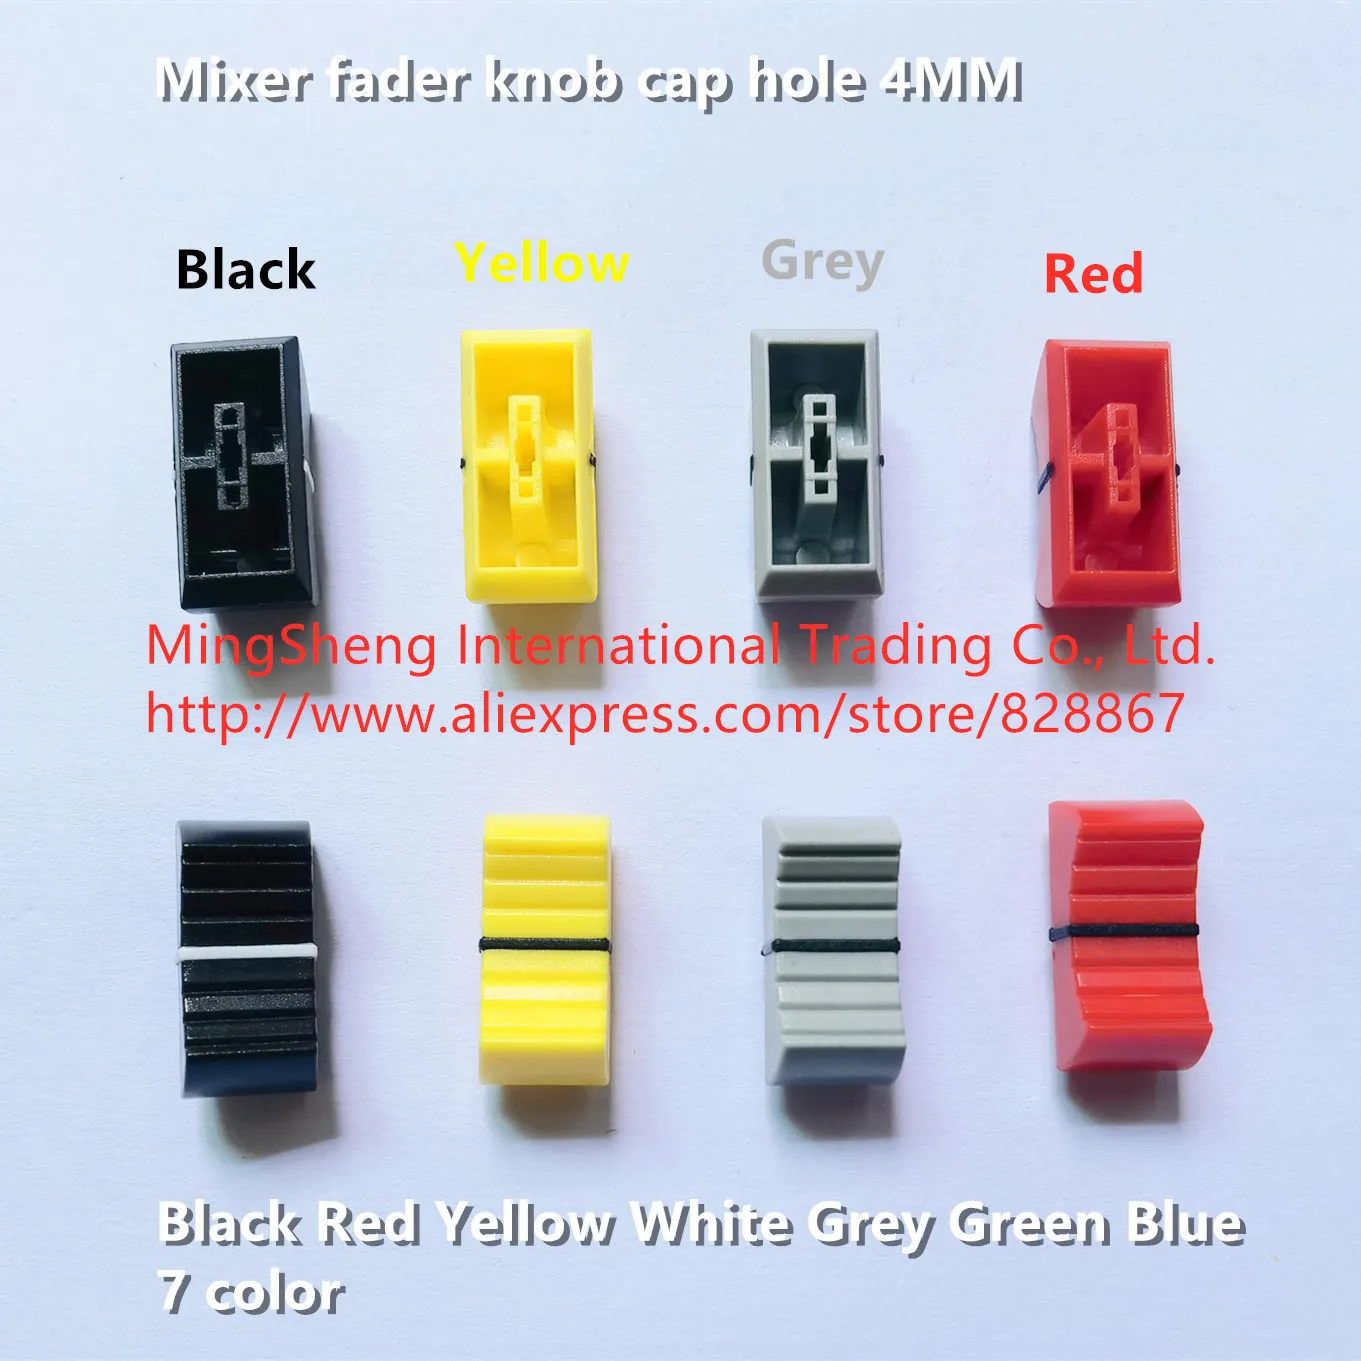 Original new 100% mixer fader knob cap black red yellow white grey green bule hole 4MM